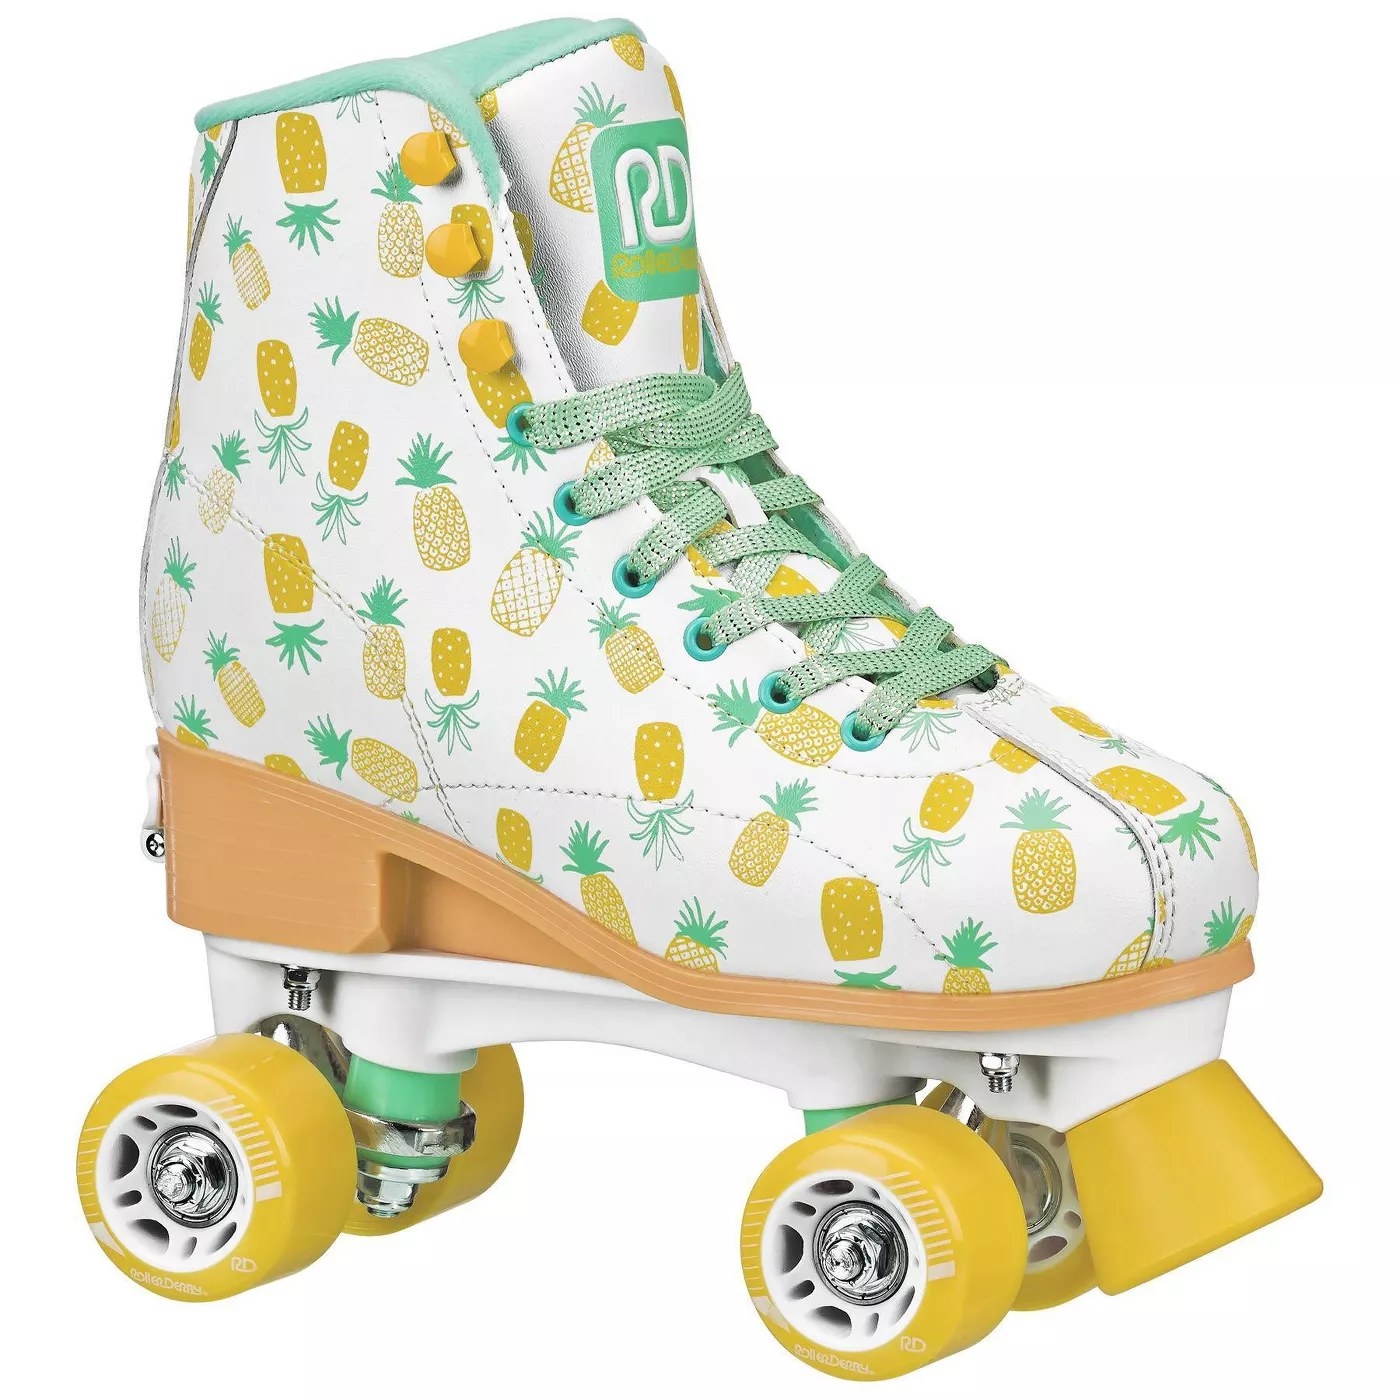 The pineapple-patterned roller derby skates